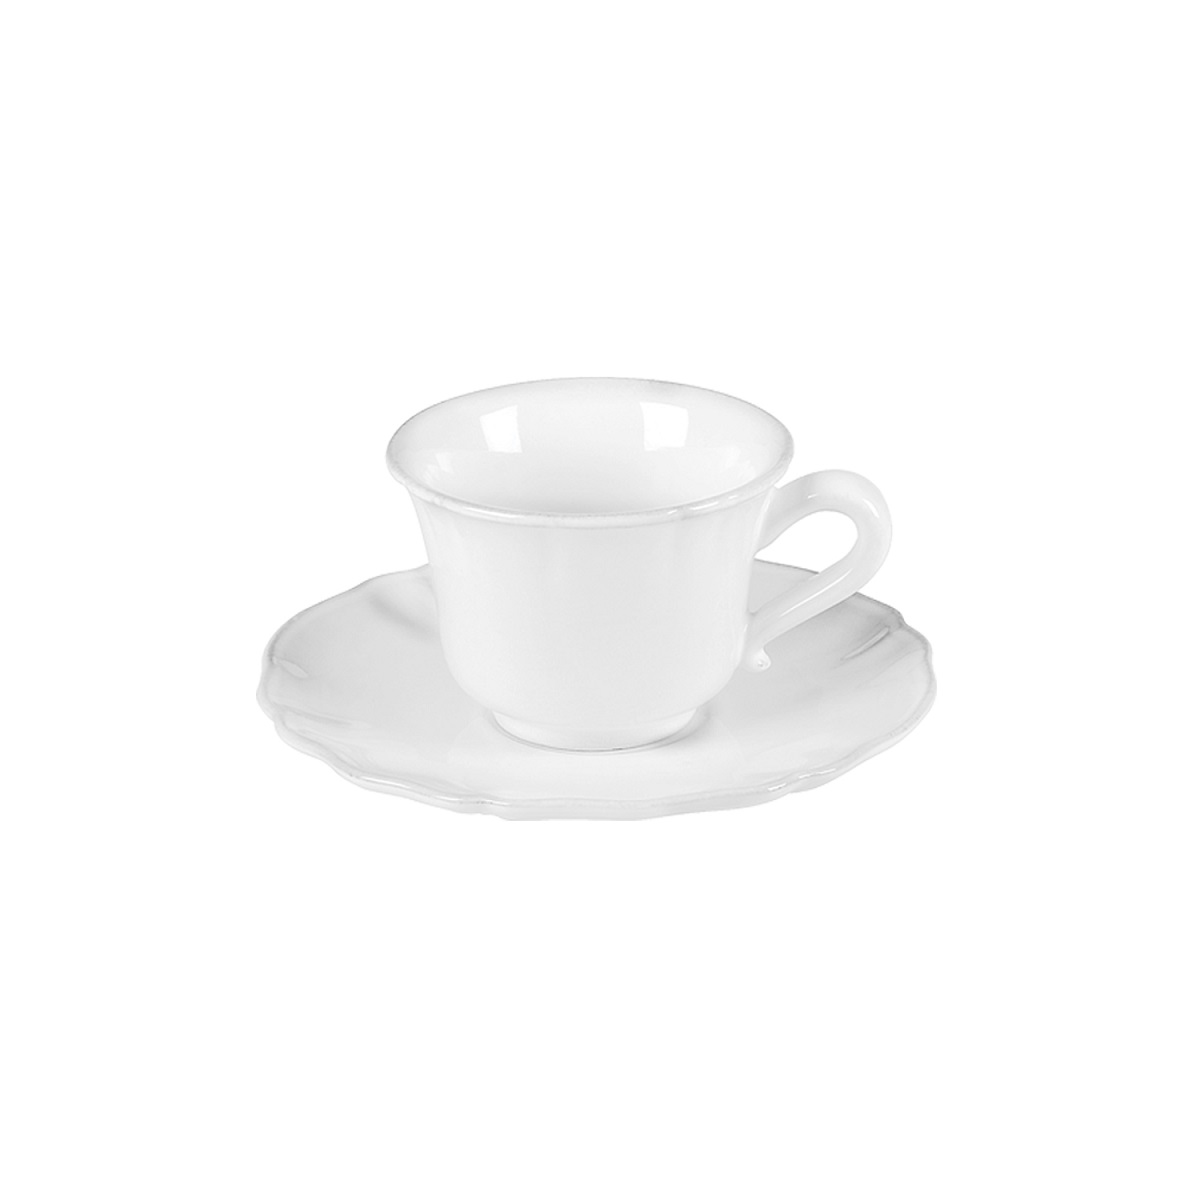 Alentejo White Tea Cup & Saucer Gift